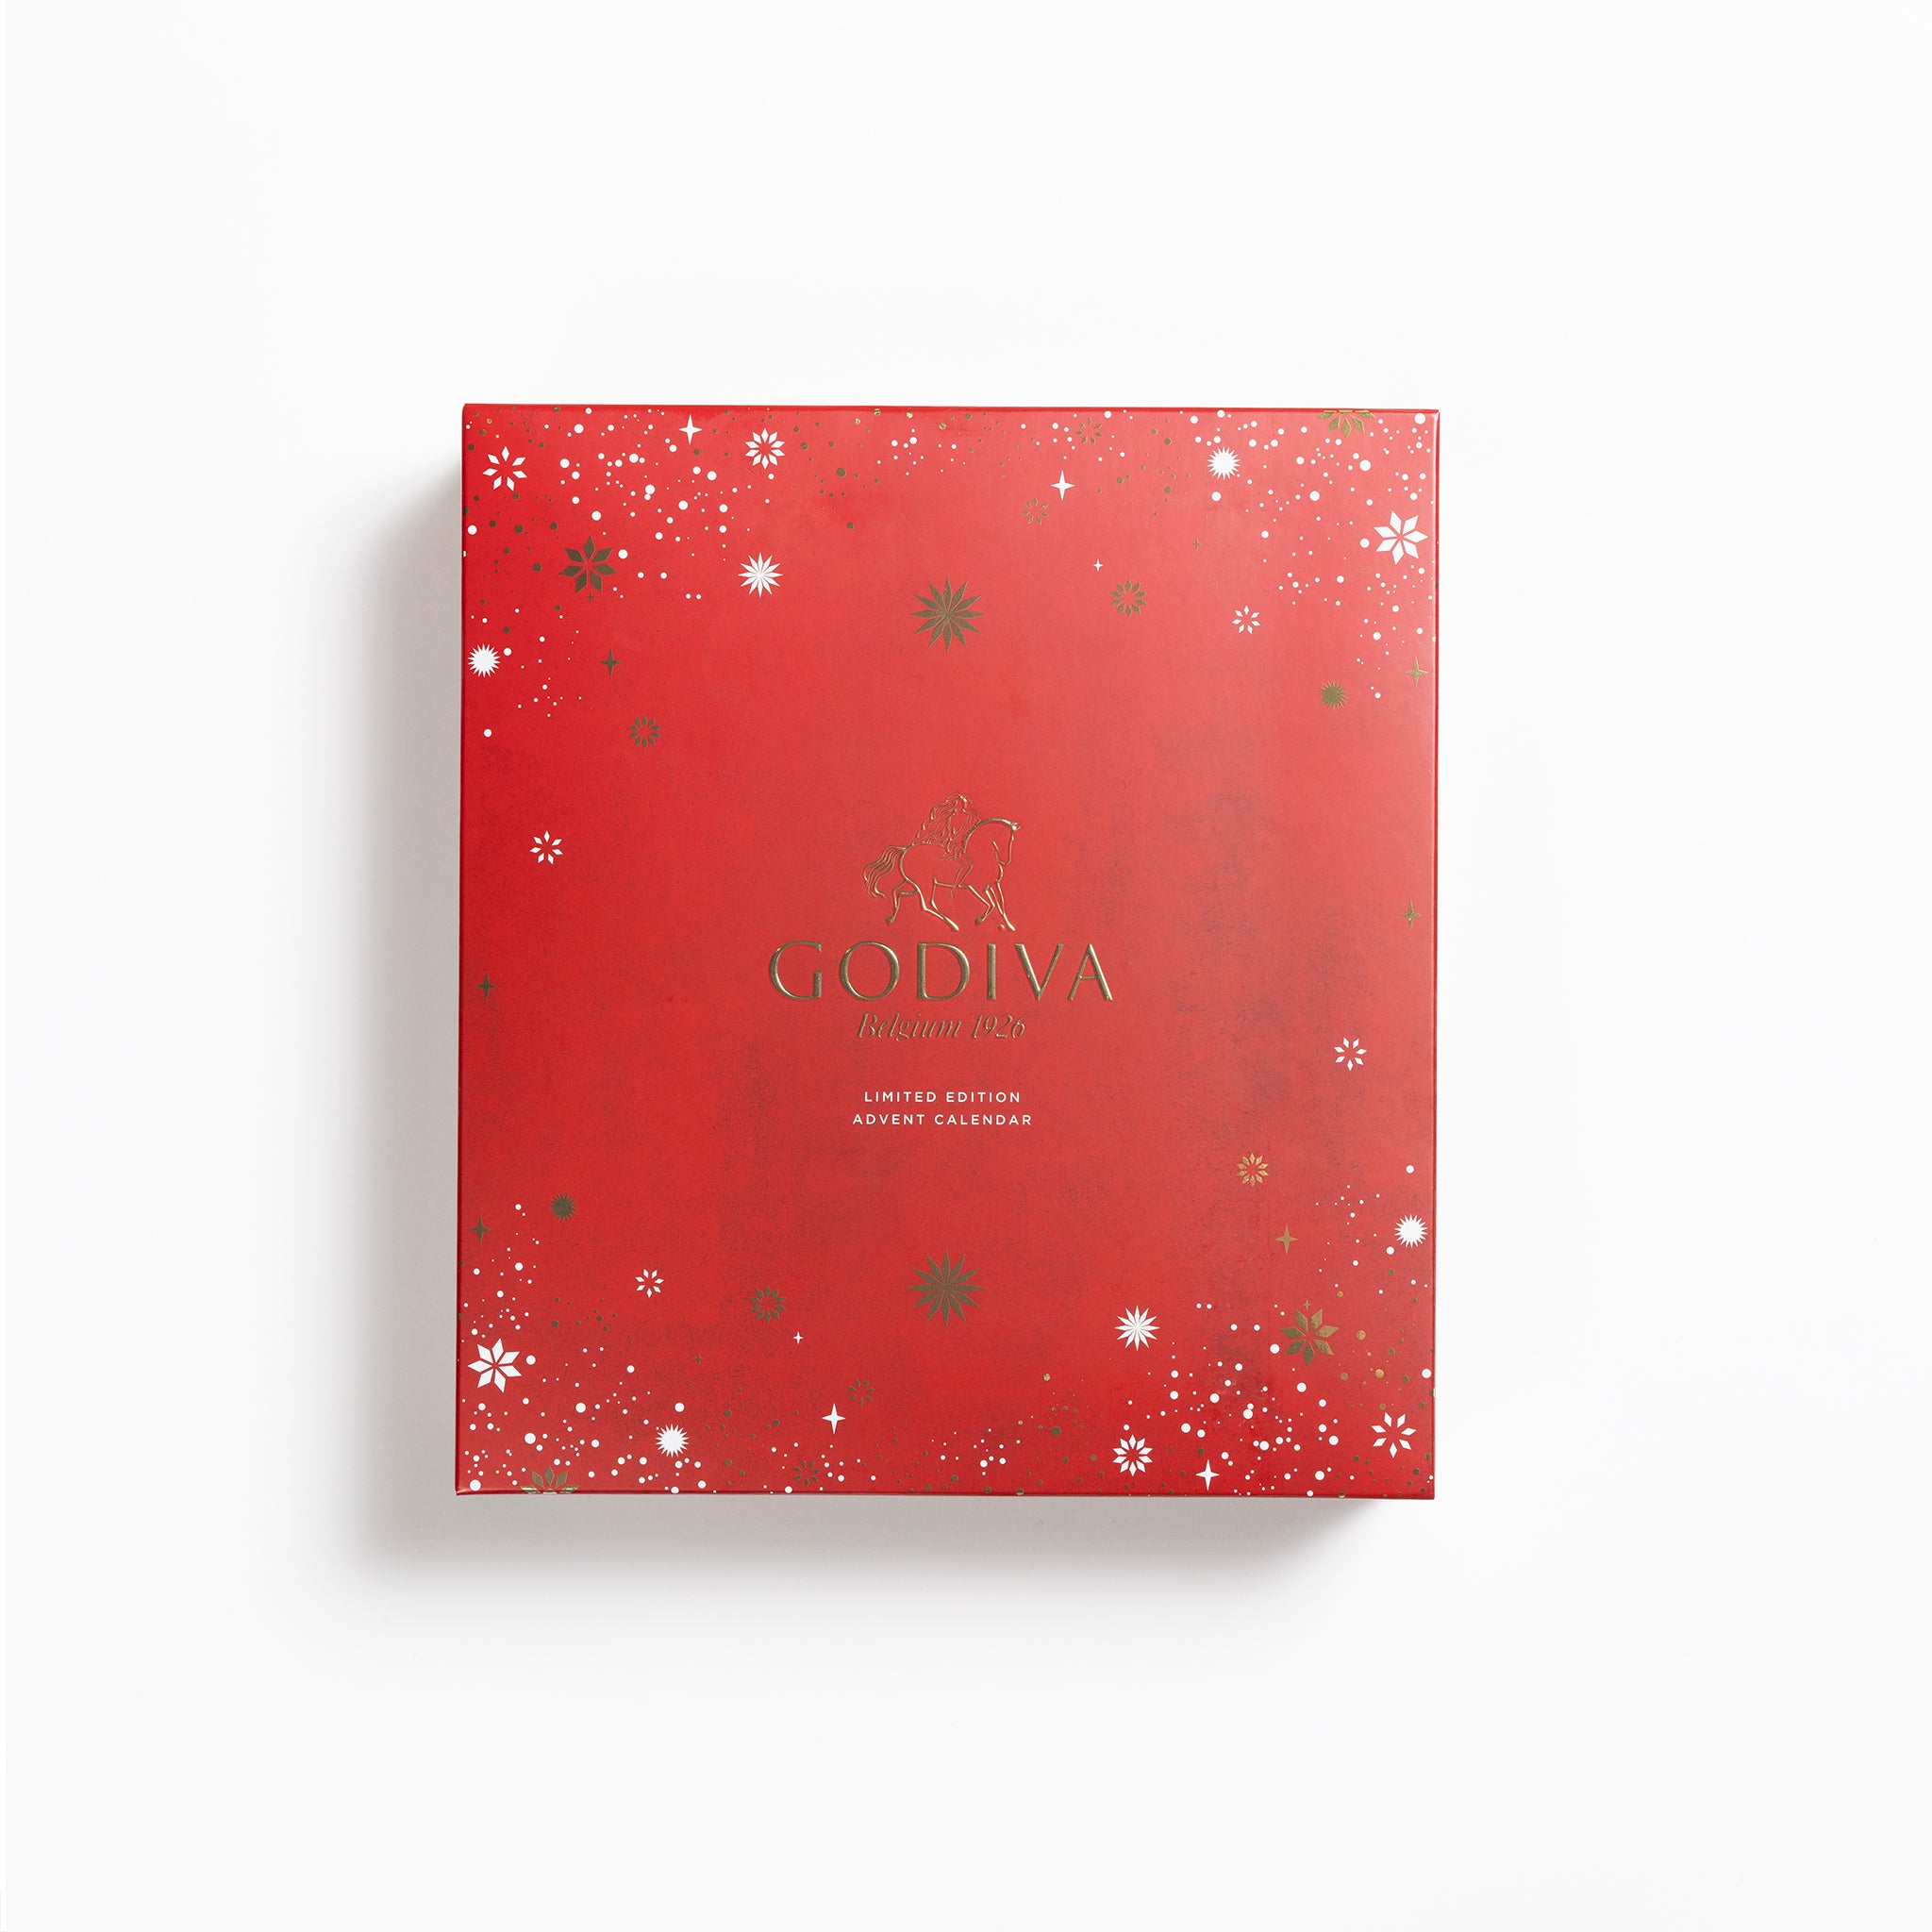 limited-edition-chocolate-advent-calendar-1.jpg